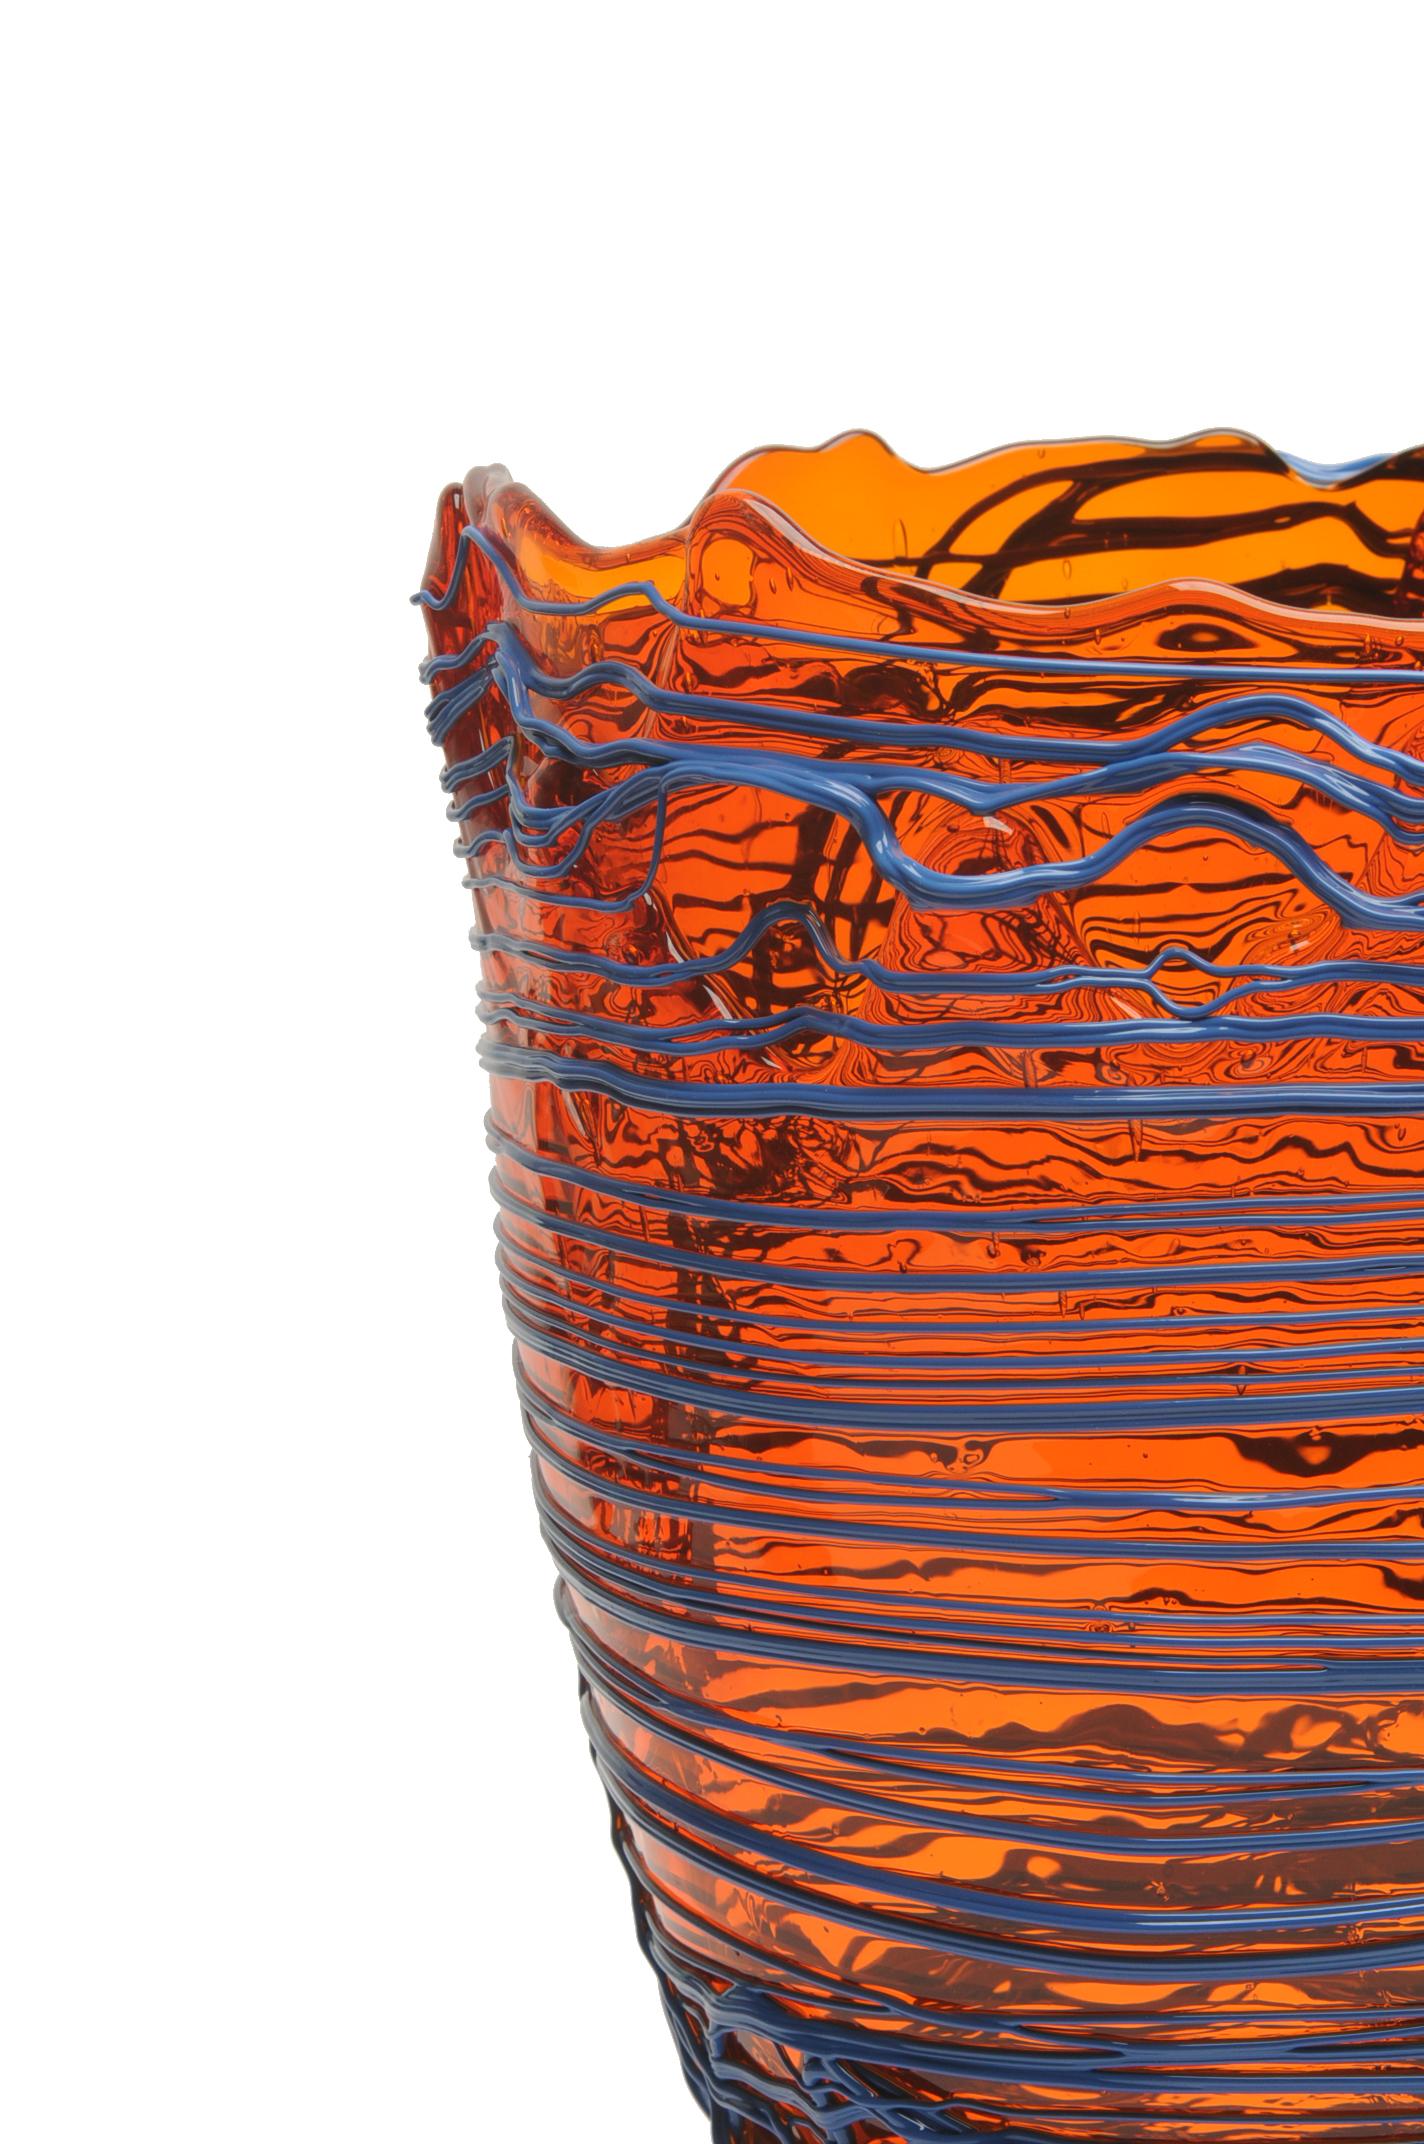 Italian Contemporary Gaetano Pesce Spaghetti L Vase Soft Resin Orange Dark Lavender For Sale